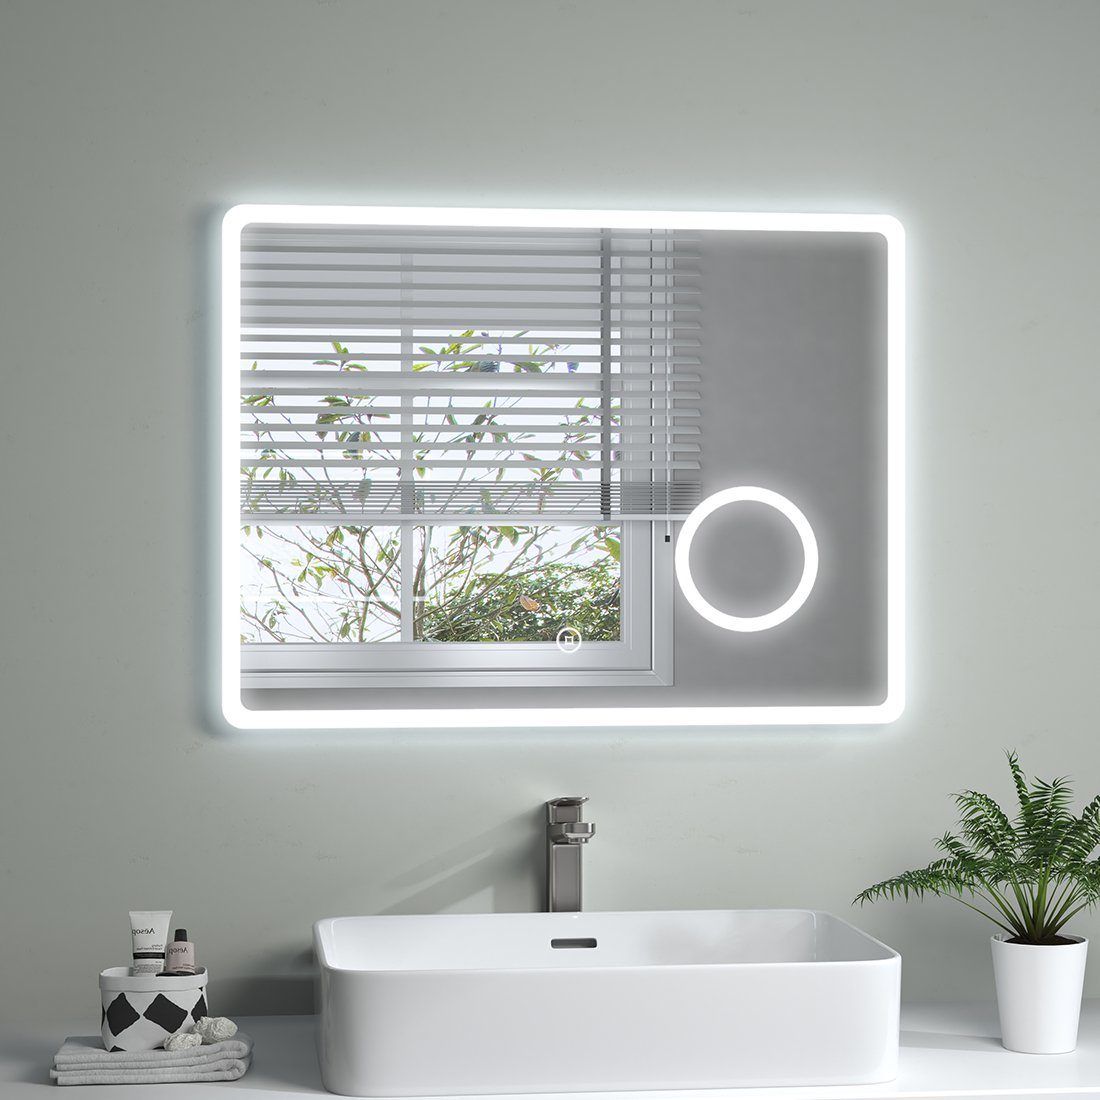 S'AFIELINA Badspiegel LED Badezimmerspiegel mit Beleuchtung Schminkspiegel Energiesparend, Touchschalter,3 Lichtfarben,Dimmbar,Beschlagfrei,Energiesparend,IP54